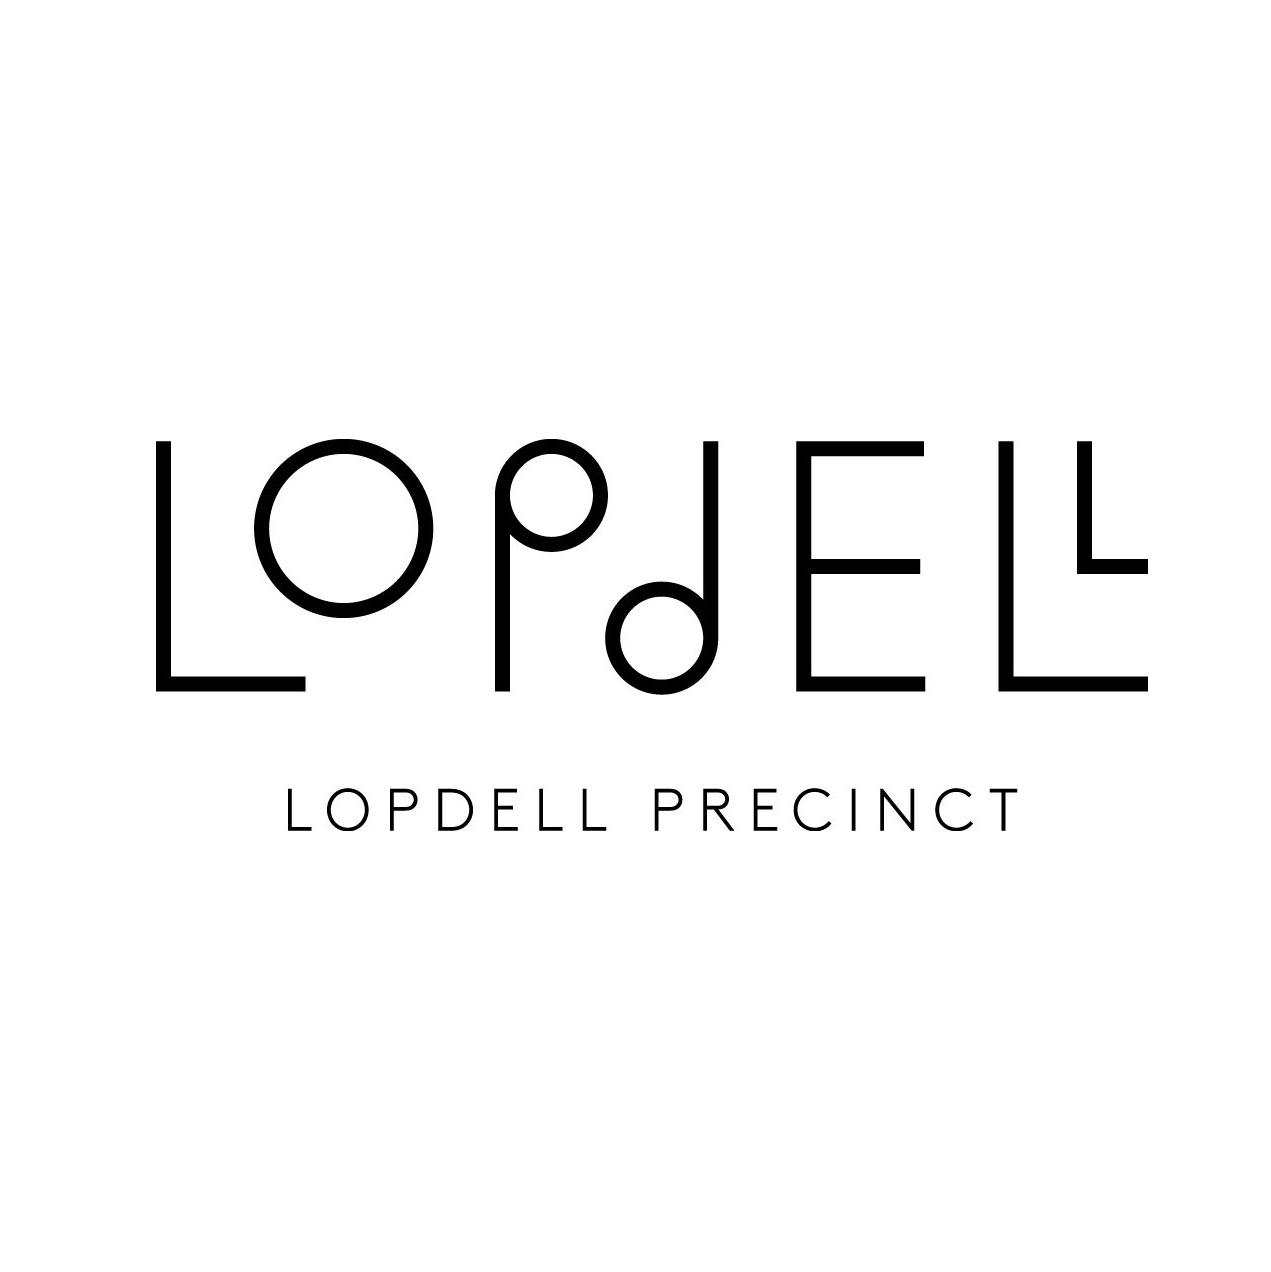 Lopdell Precinct